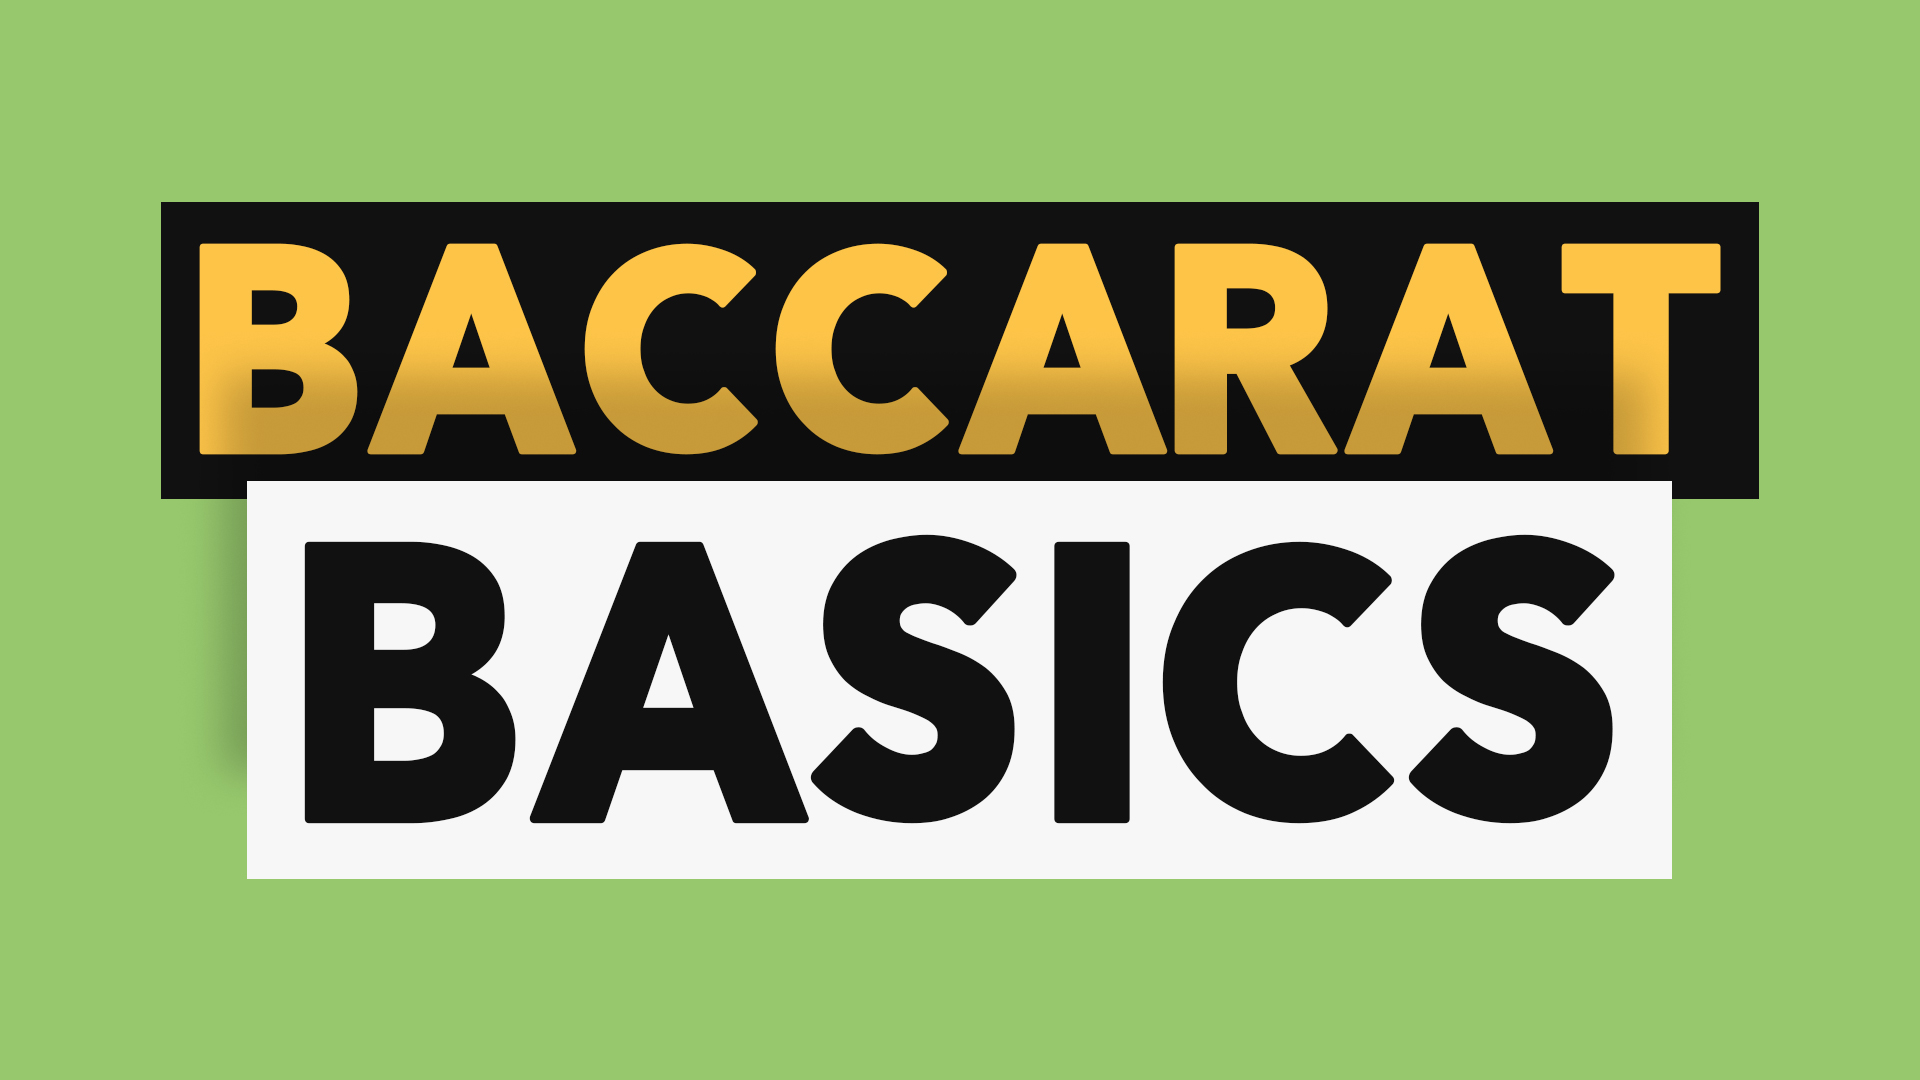 Baccarat百家樂 Basics基本